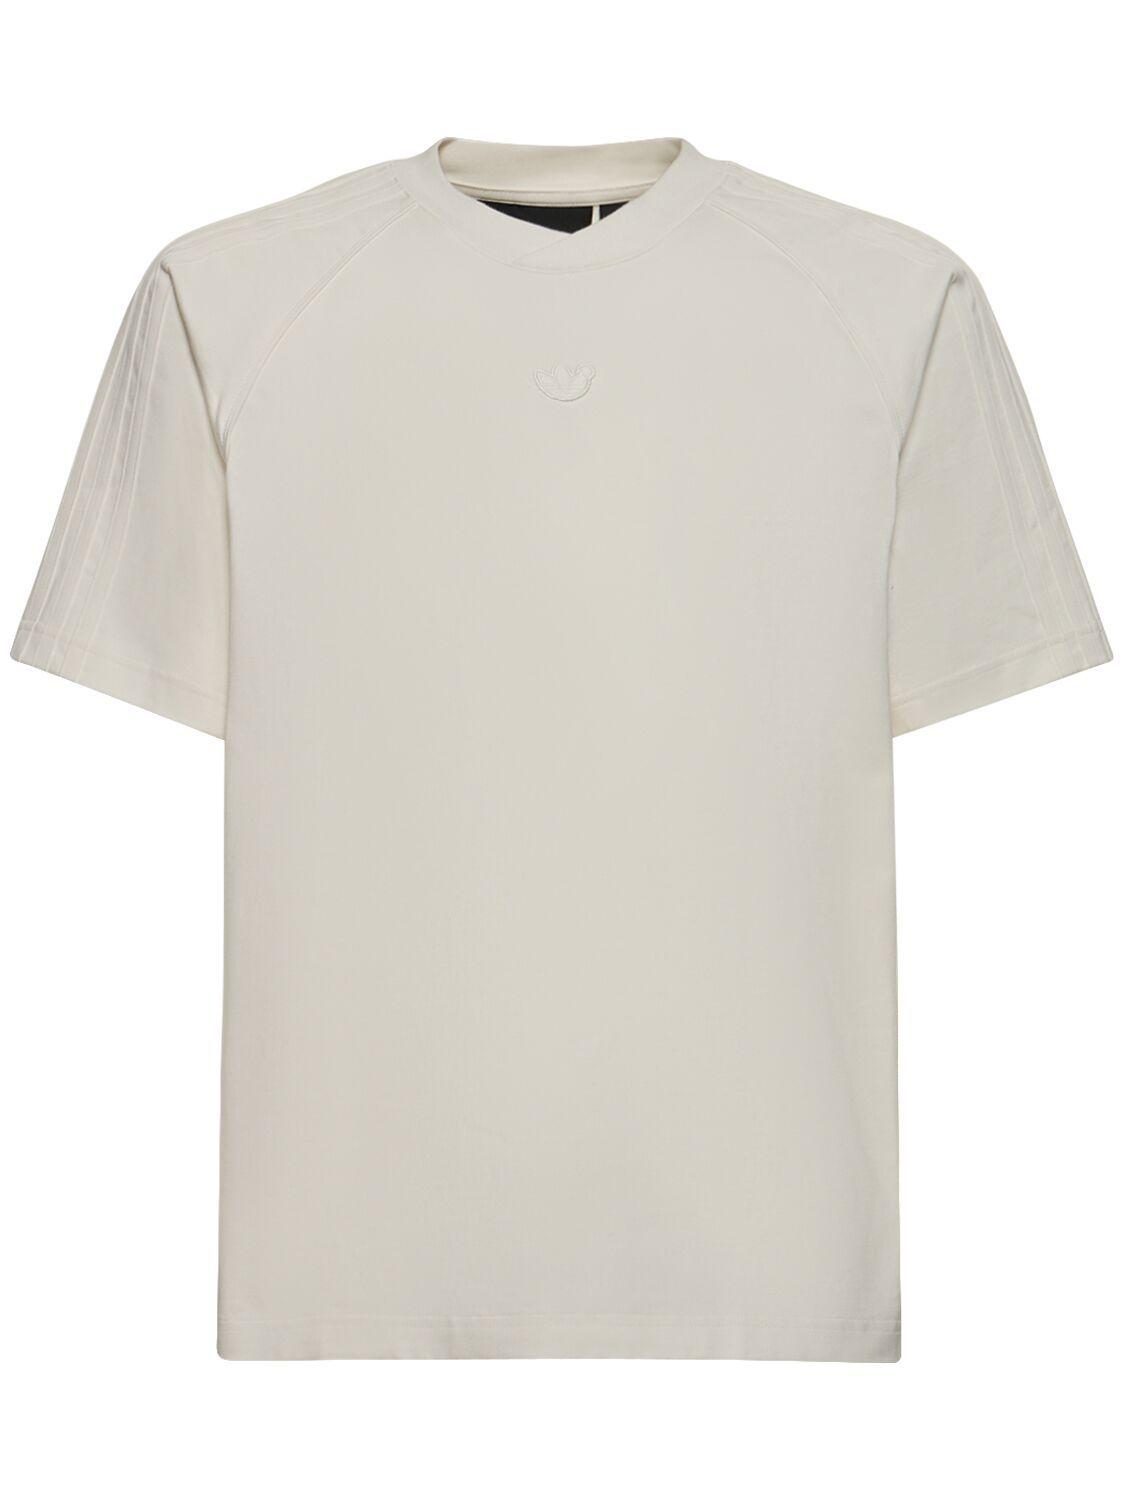 adidas Originals Essentials Cotton T-shirt | Men White Lyst for in